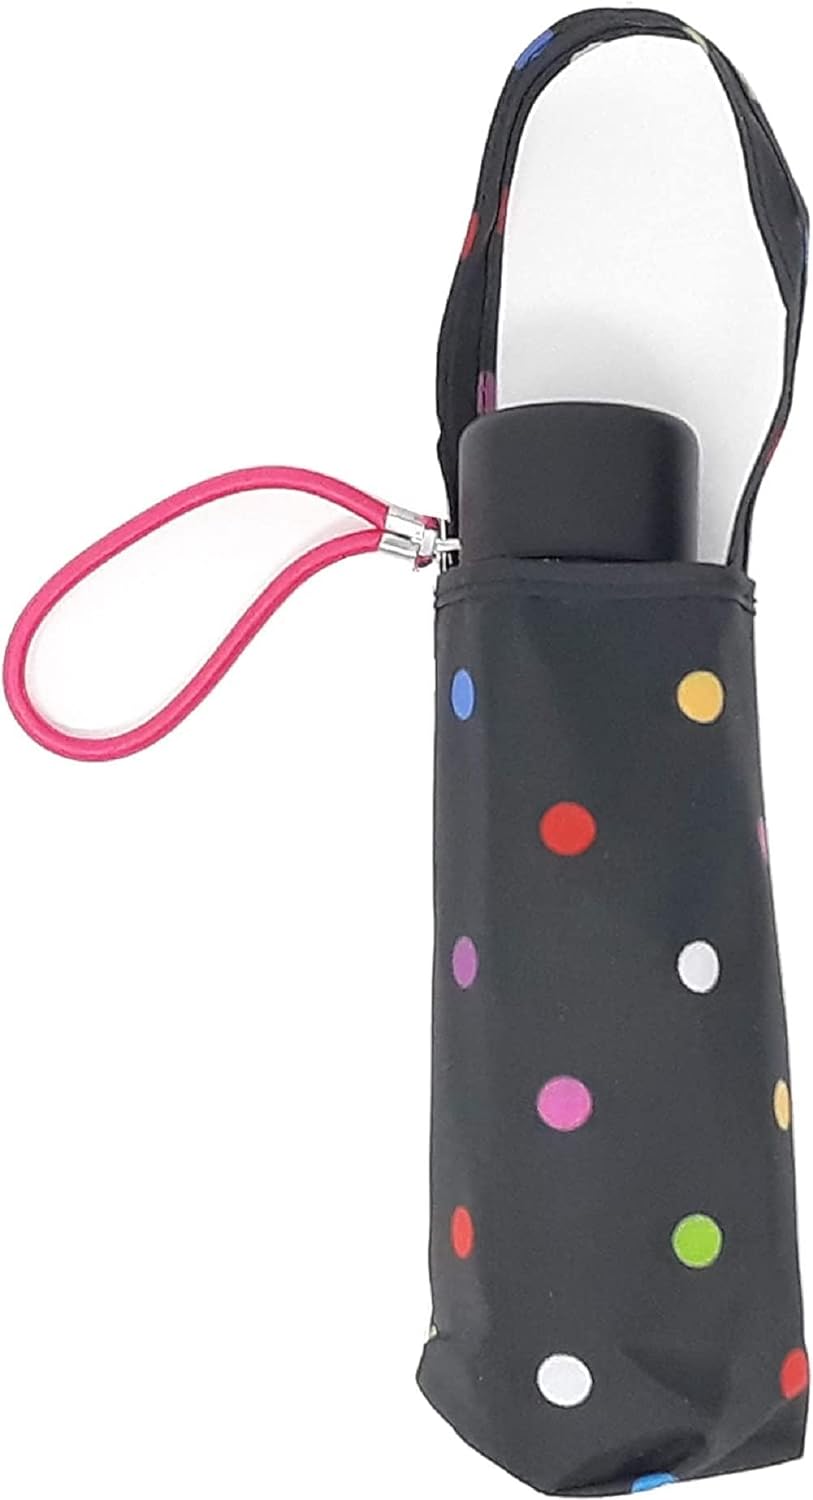 Totes Micro Mini Manual Compact Umbrella, NeverWet technology, Colorful dots on black, 38